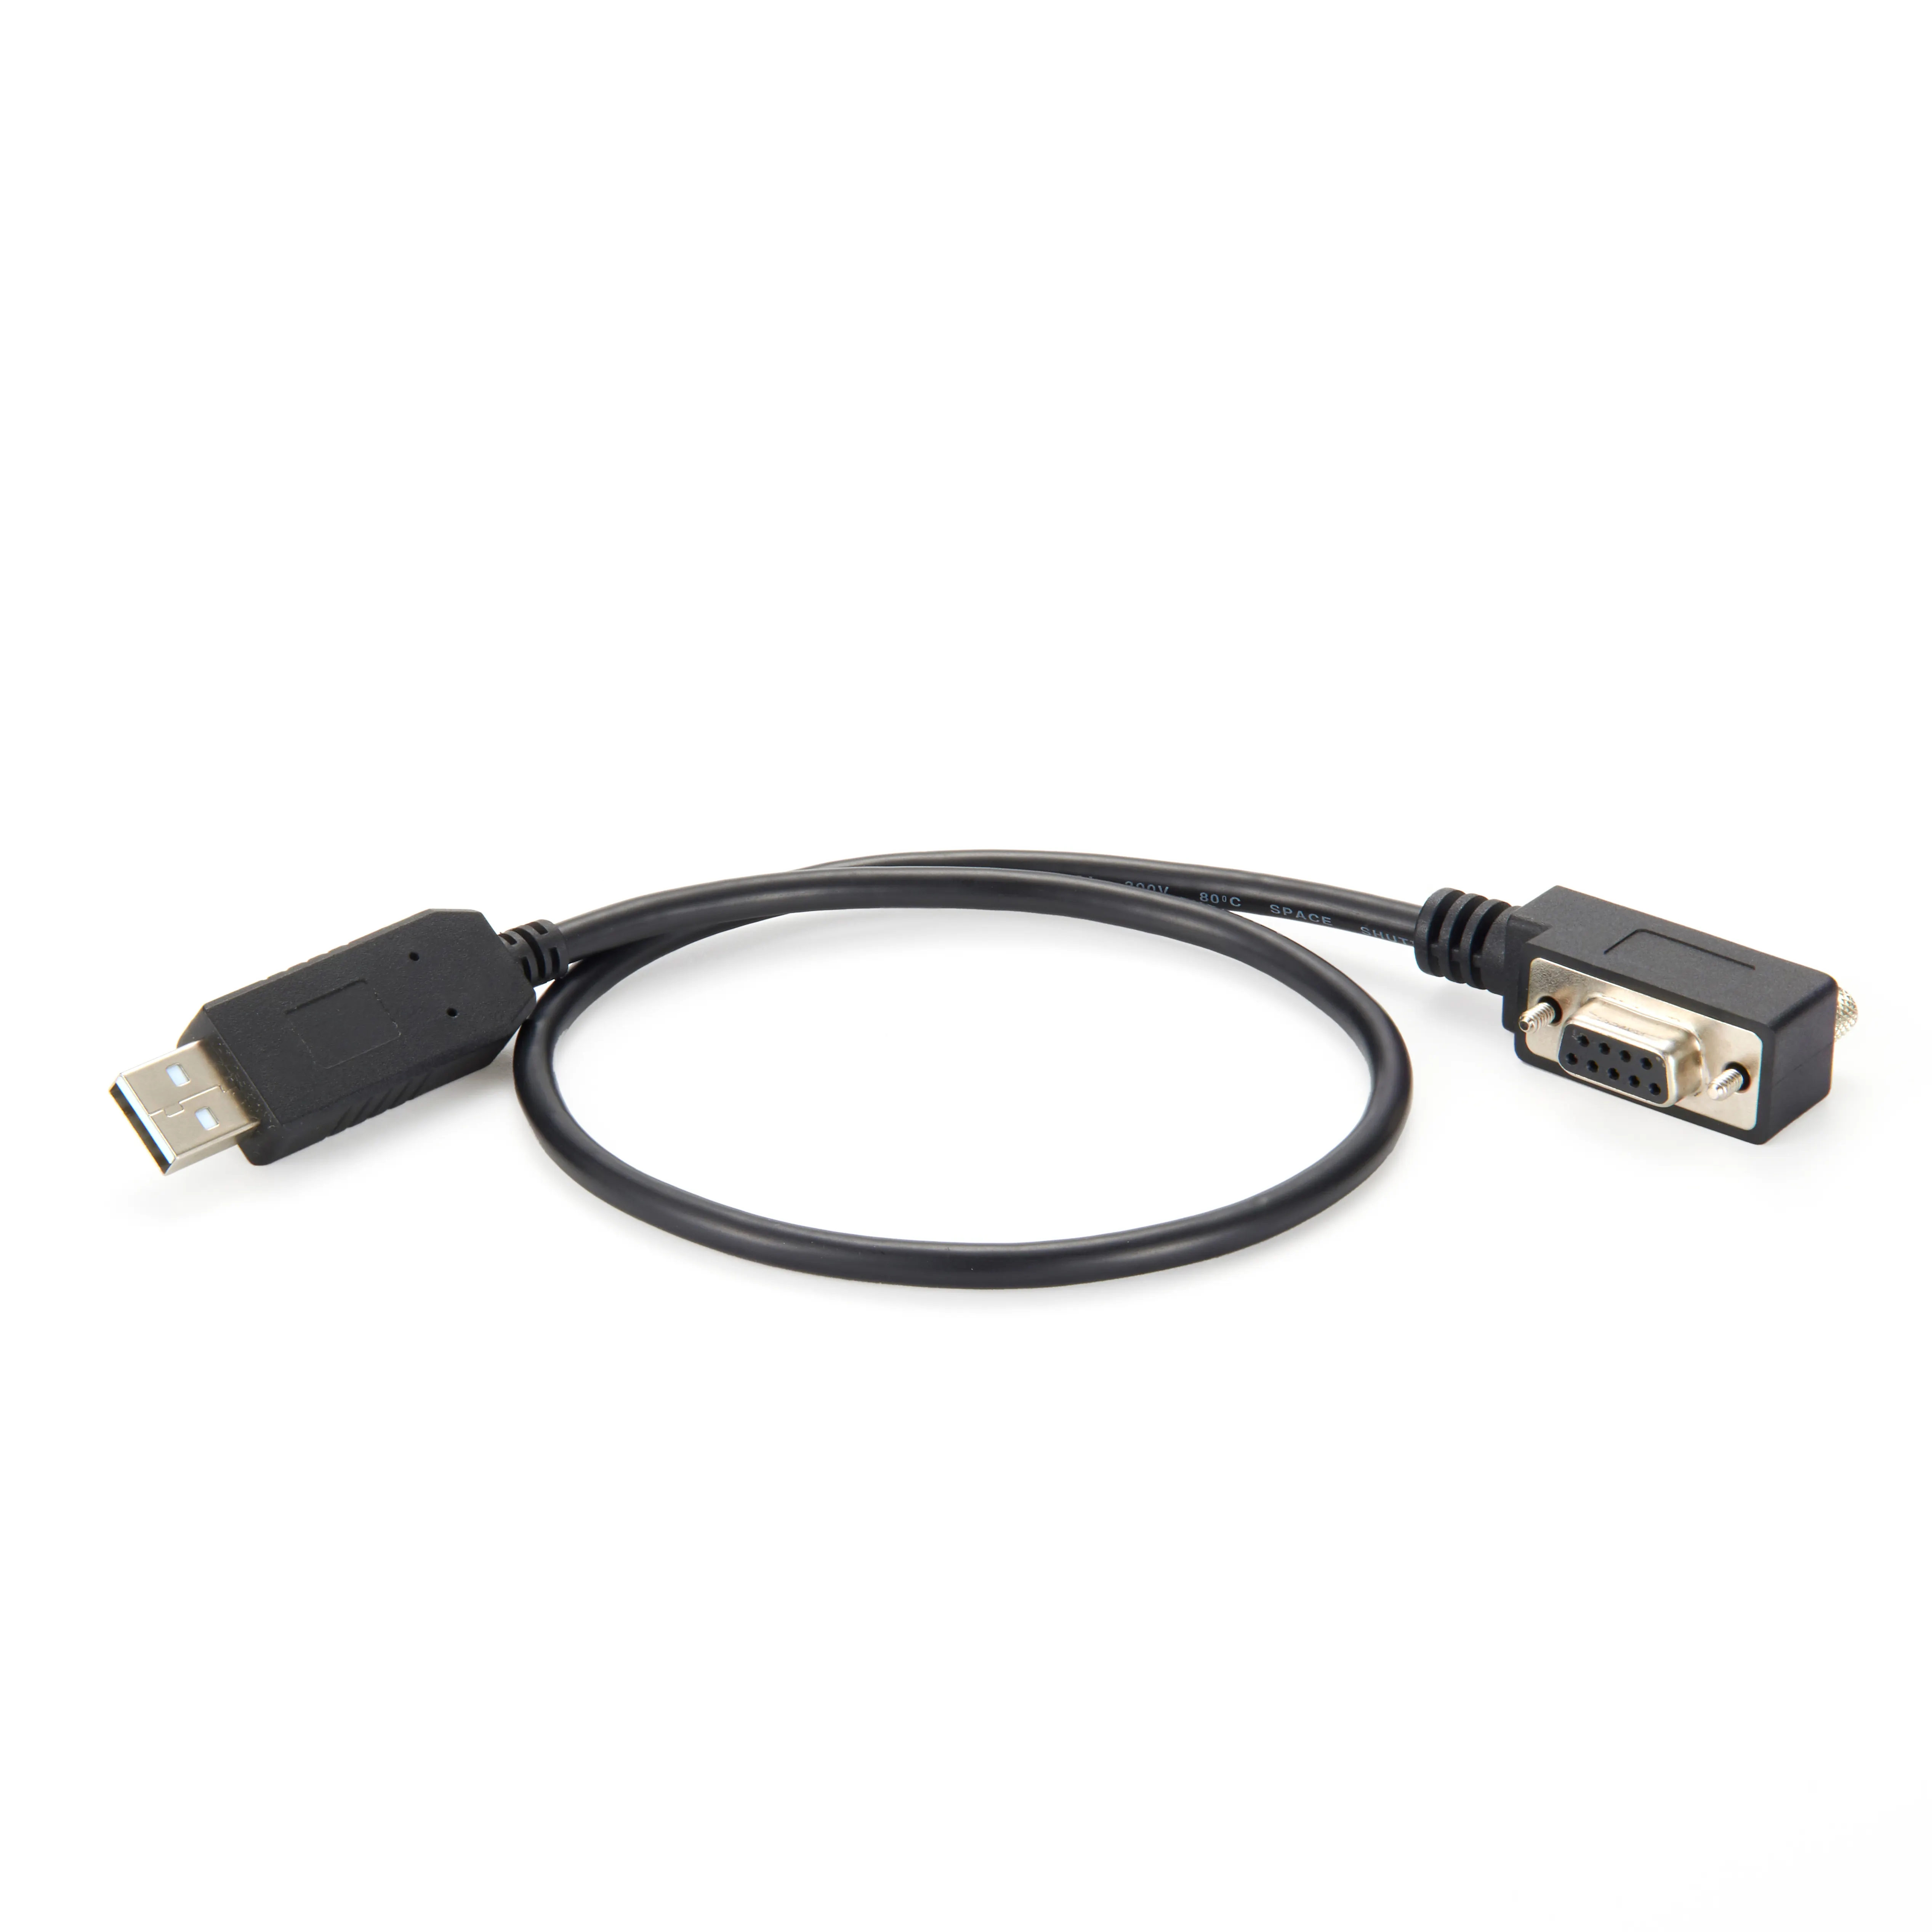 Adaptor USB Ke RS-422/485 Profil Rendah Kabel Adaptor Seri Db9/USB Ke RS232 DB9 90 Derajat